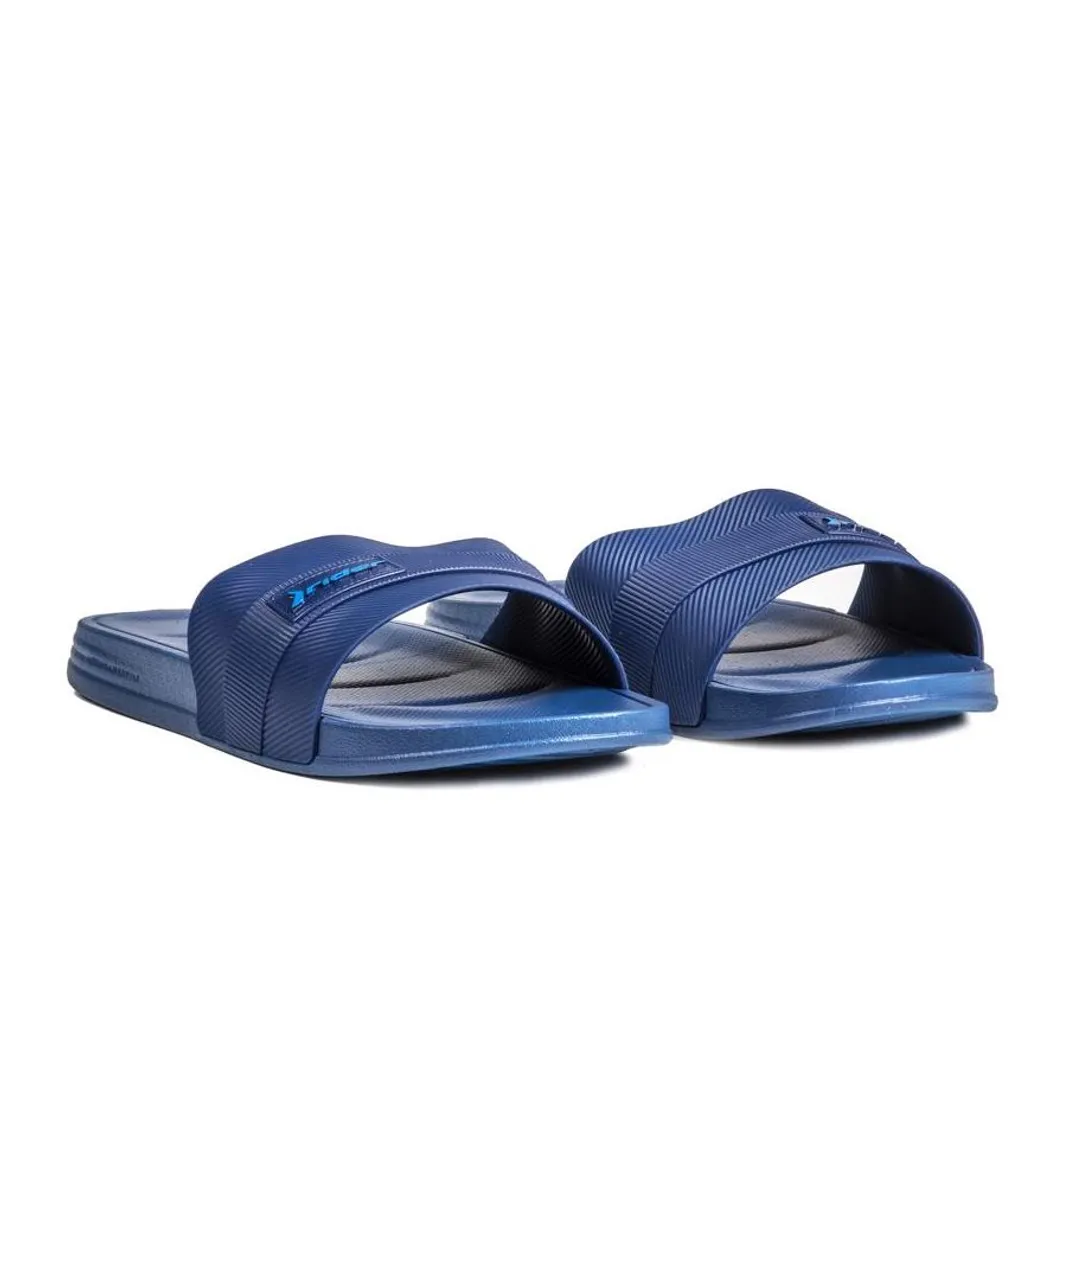 Rider Mens Go Slide Sandals - Blue Rubber